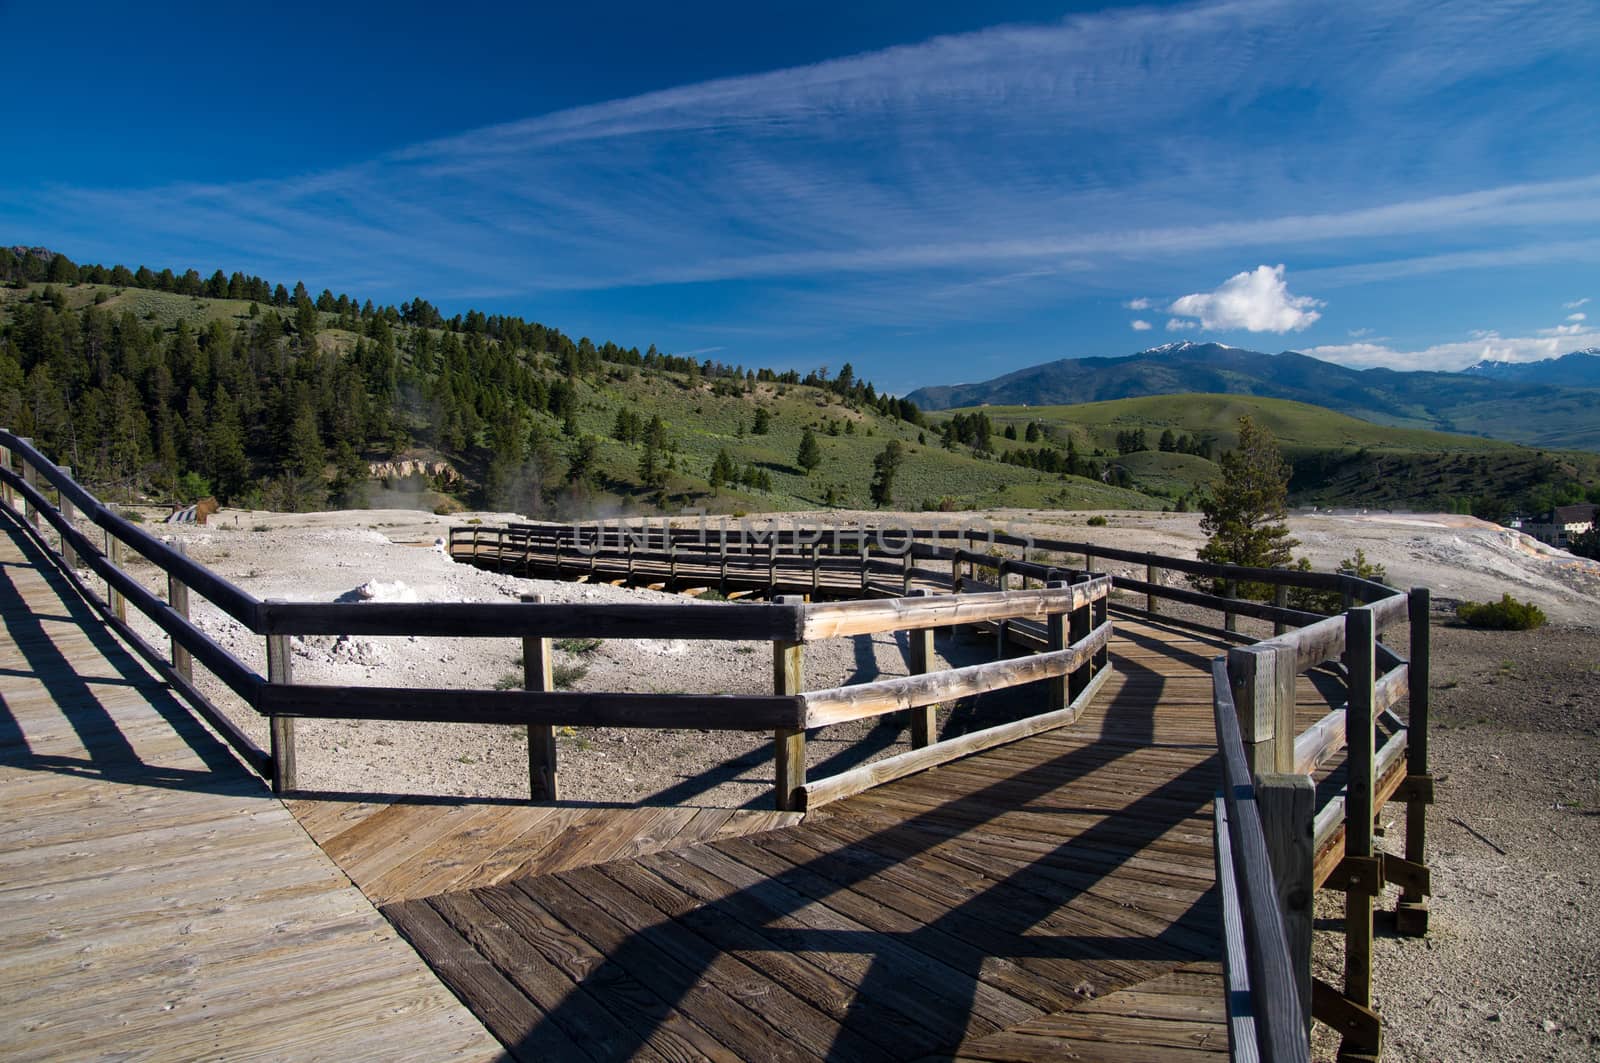 Boardwalk overlooks Mammoth Hot Springs, Yellowstone National Park